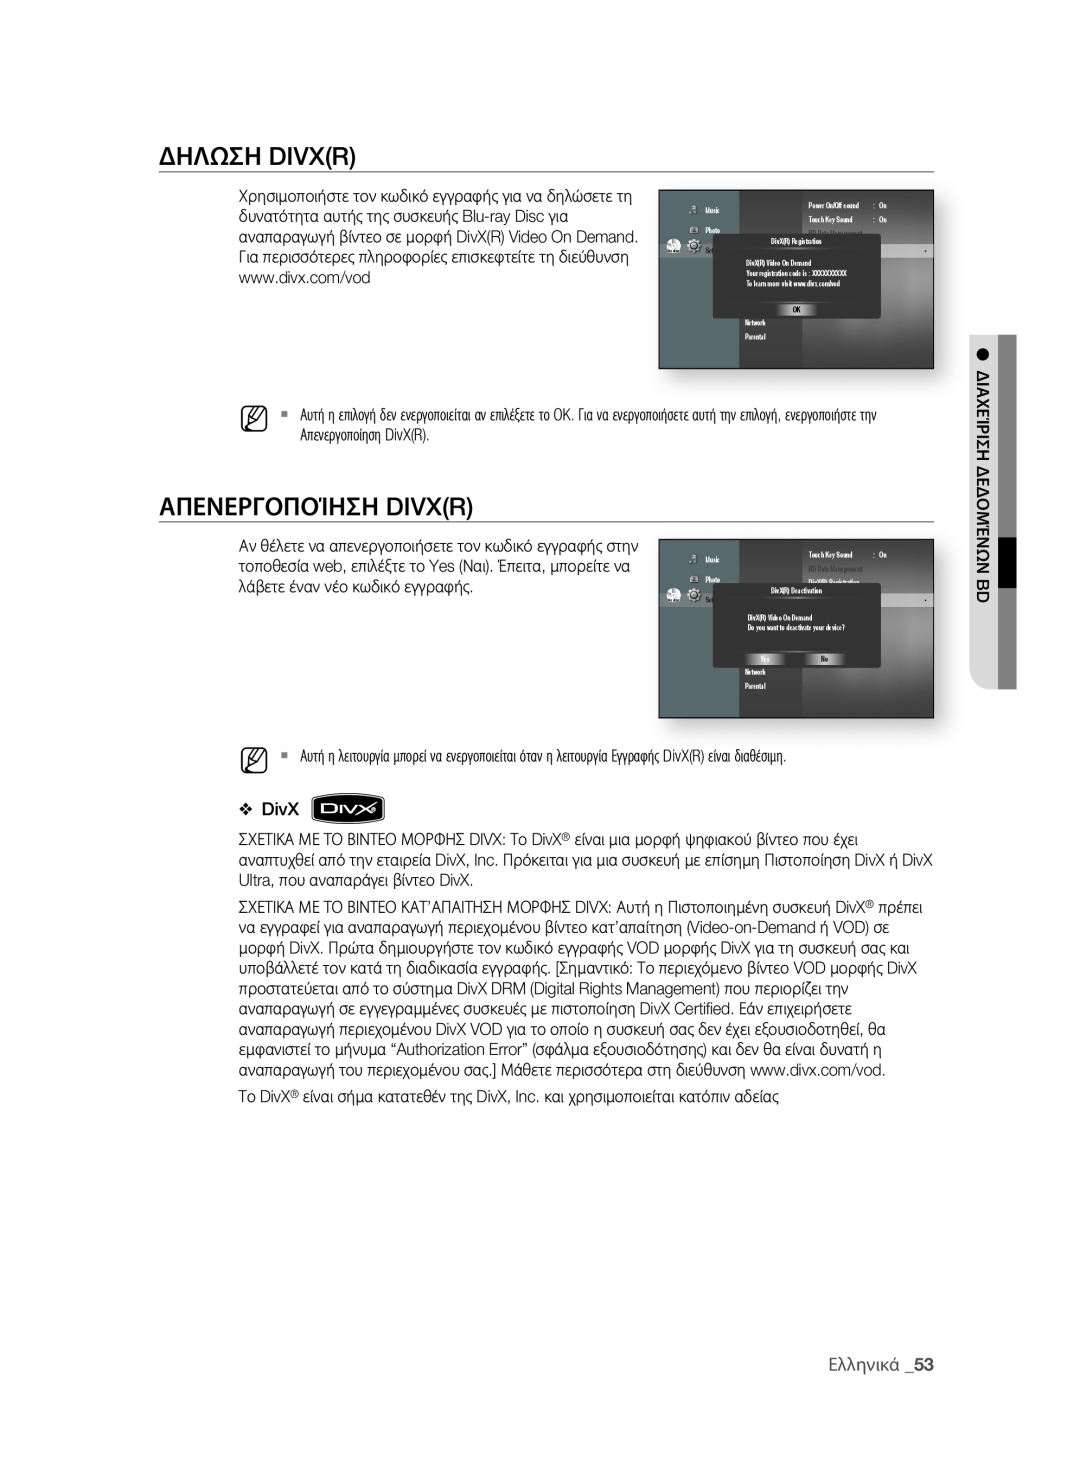 Samsung BD-P1580/EDC δηΛΩση DIVXR, ΑΠεΝερΓοΠοίηση DIVXR, δυνατότητα αυτής της συσκευής Blu-ray Disc για, DivX, Ελληνικά 3 